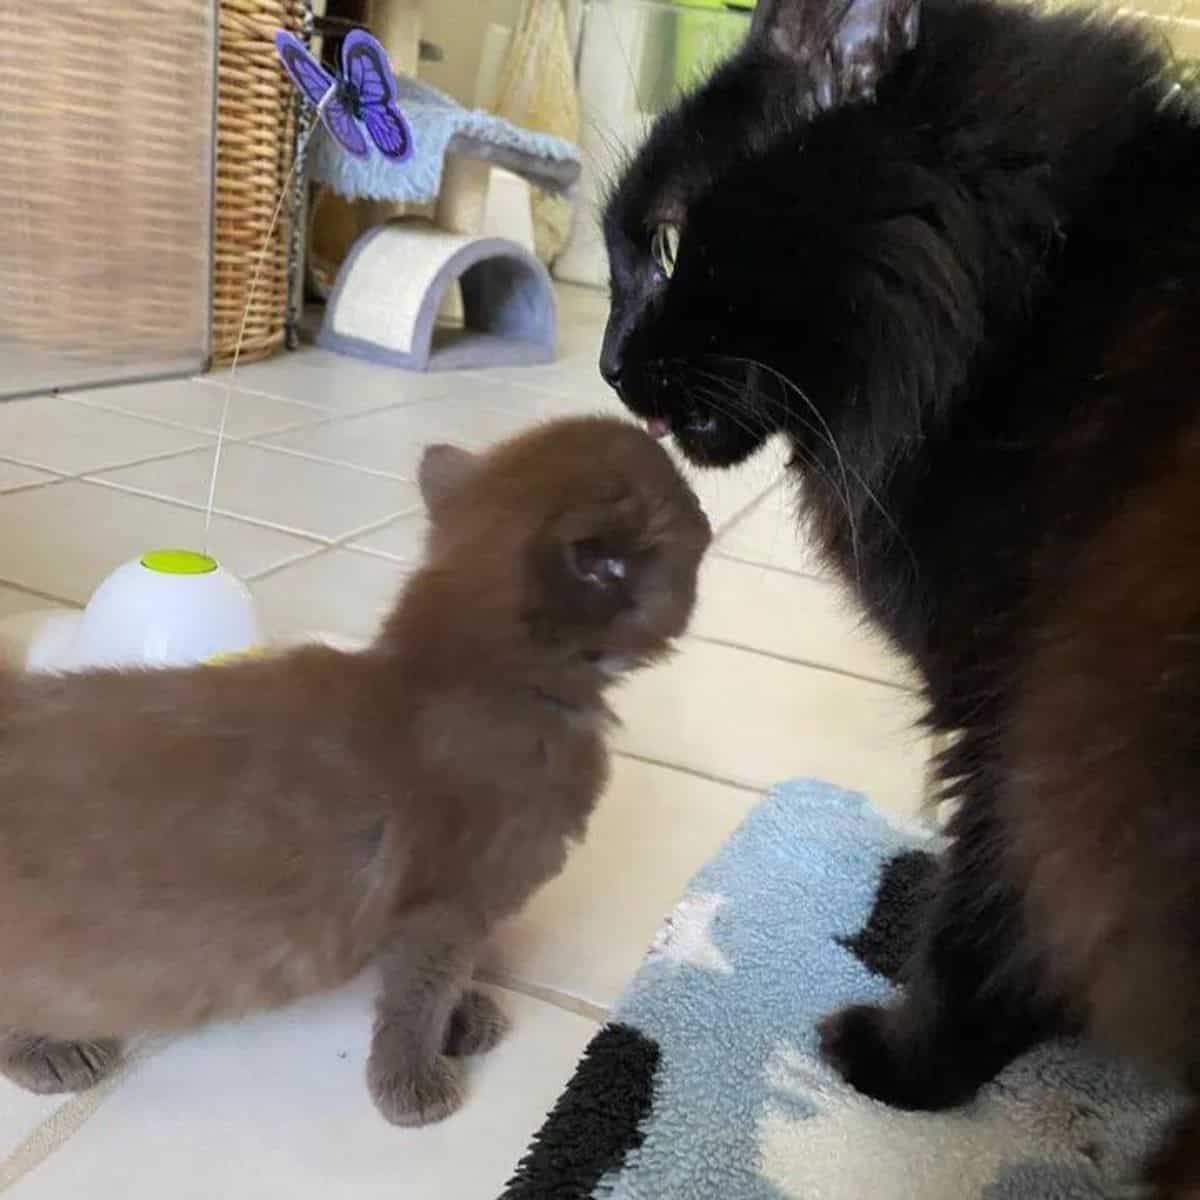 the cat licks its cute kitten